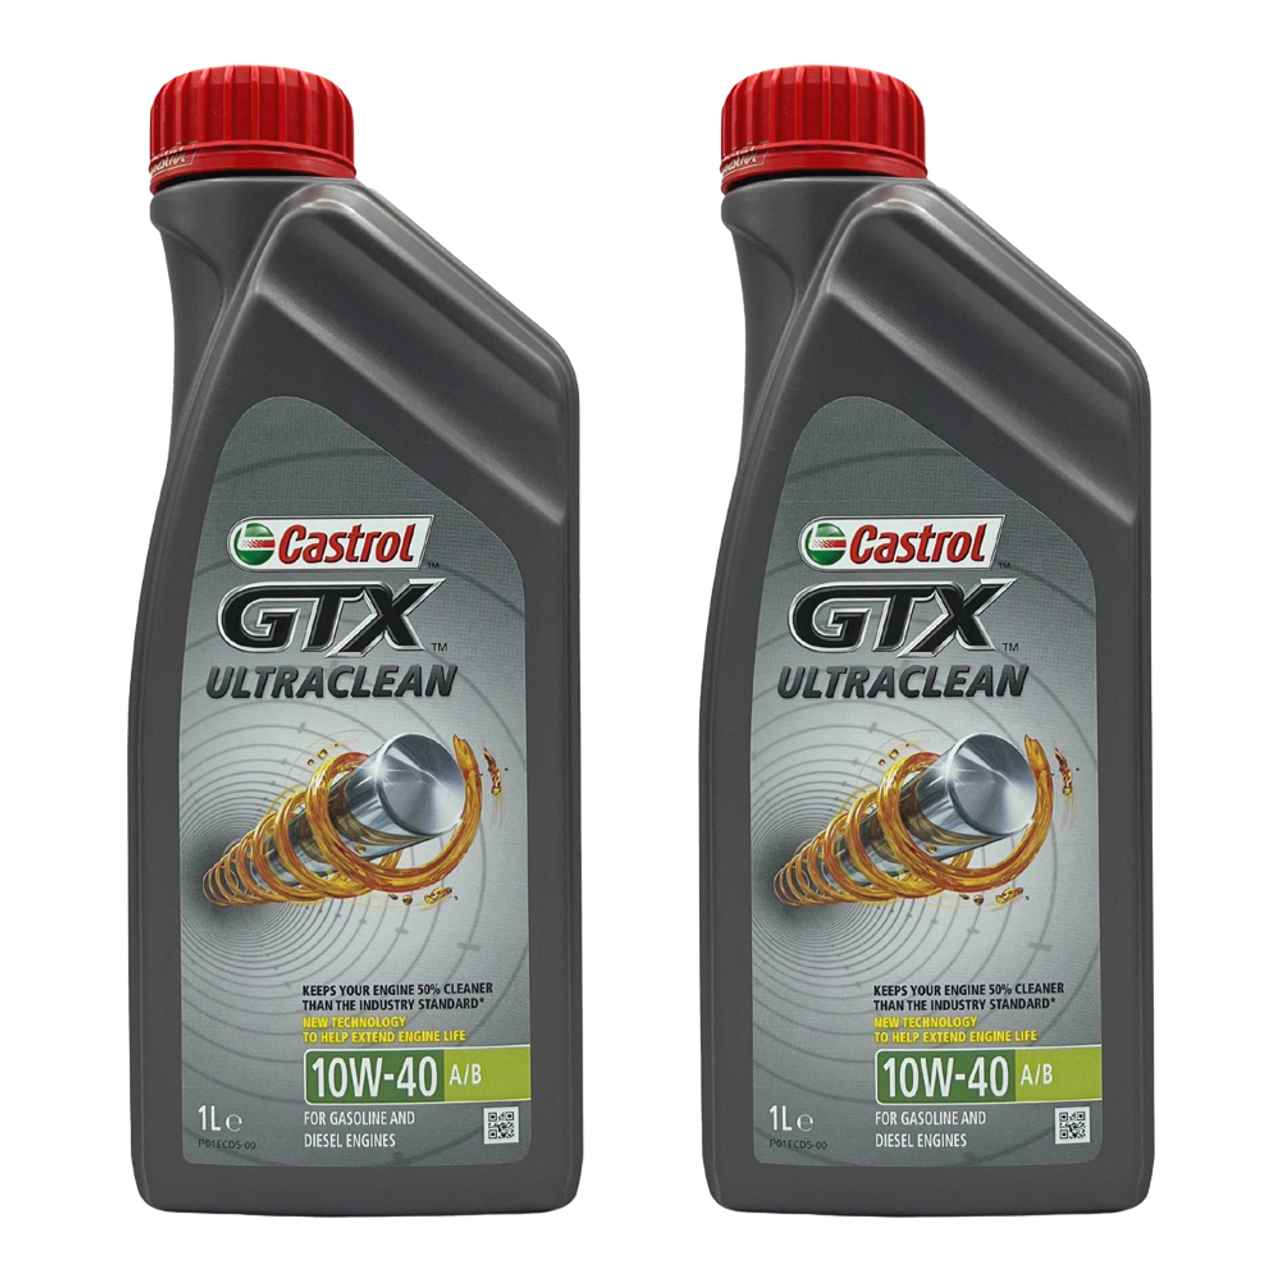 Castrol GTX Ultraclean 10W-40 A/B 2x1 Liter